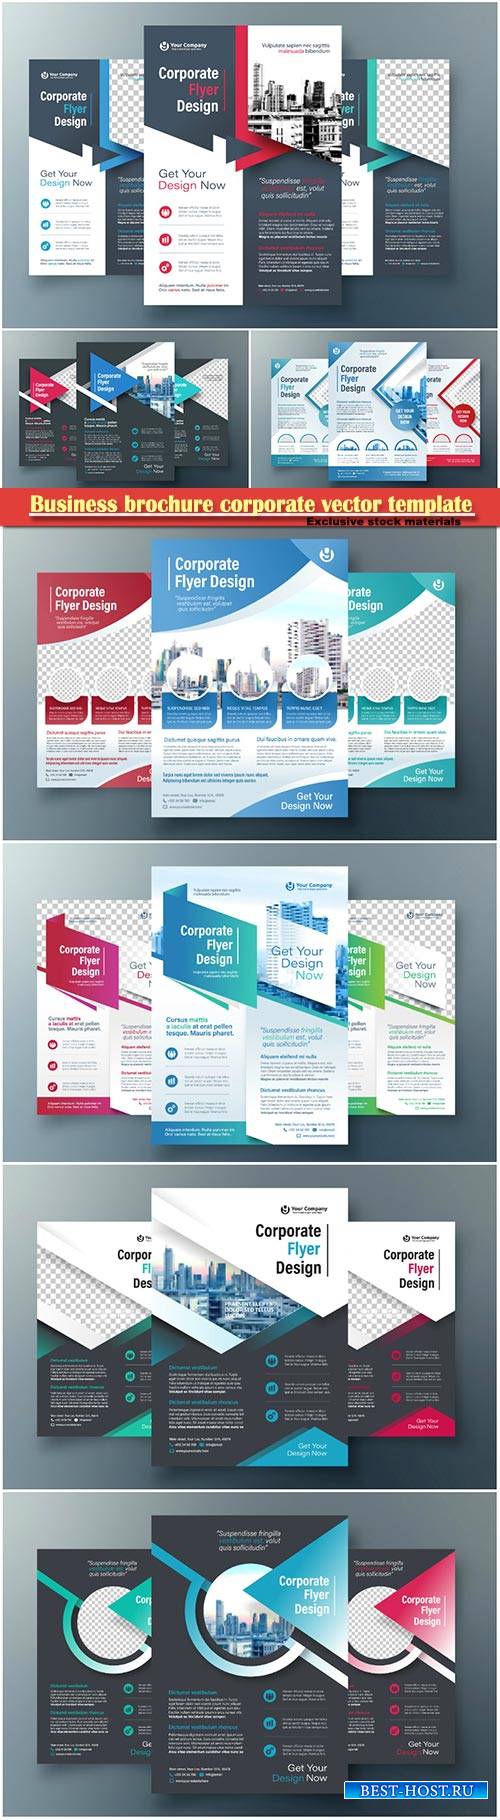 Business brochure corporate vector template, magazine flyer mockup # 11